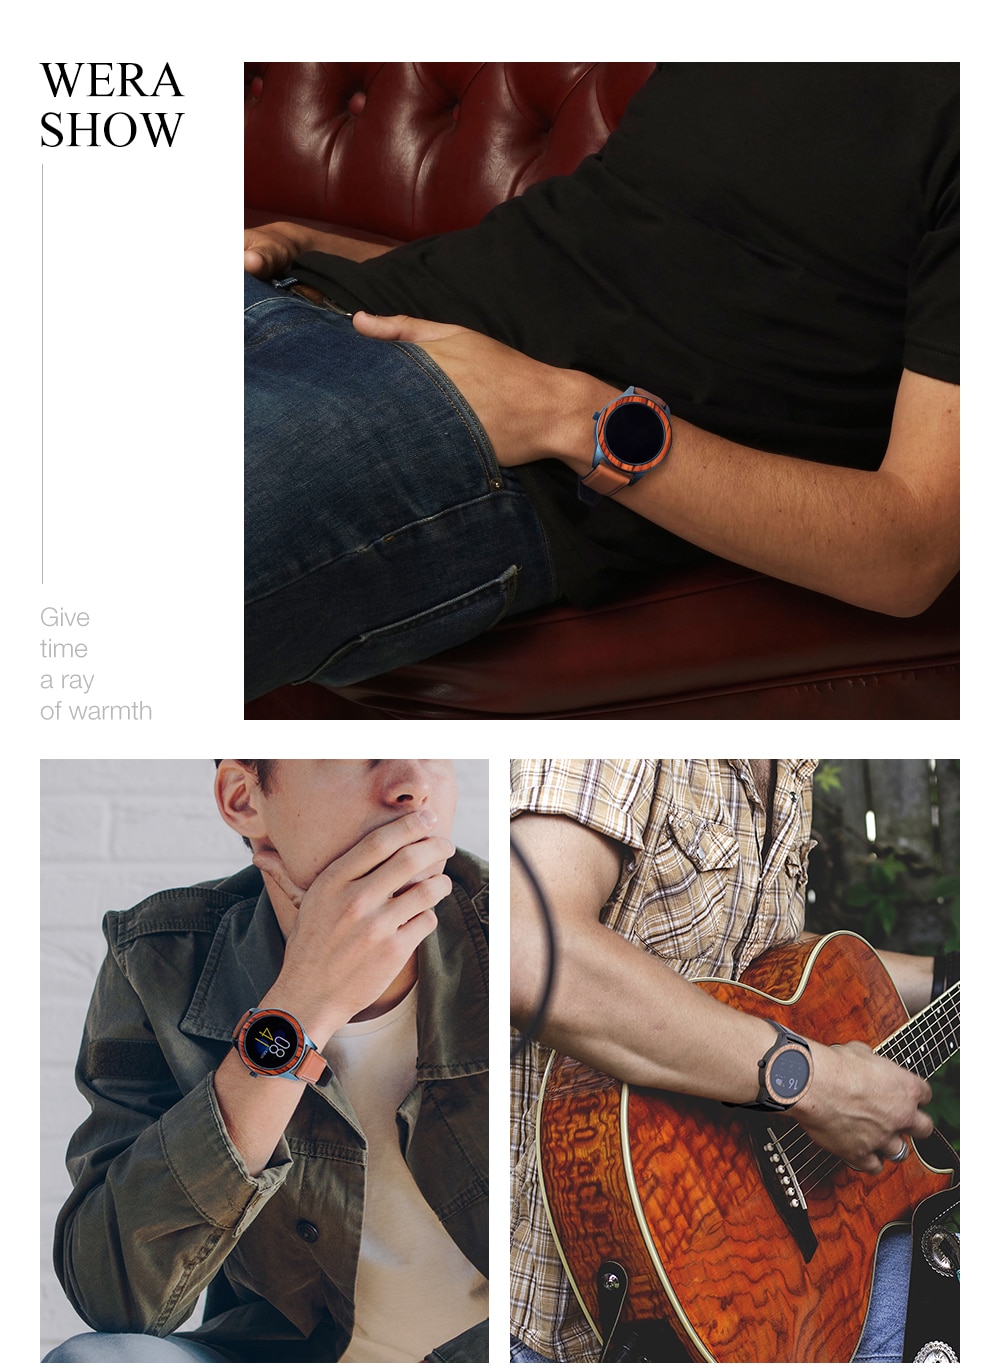 Smart Watch Wood Watch Multifunction Sport Bluetooth Wristwatch